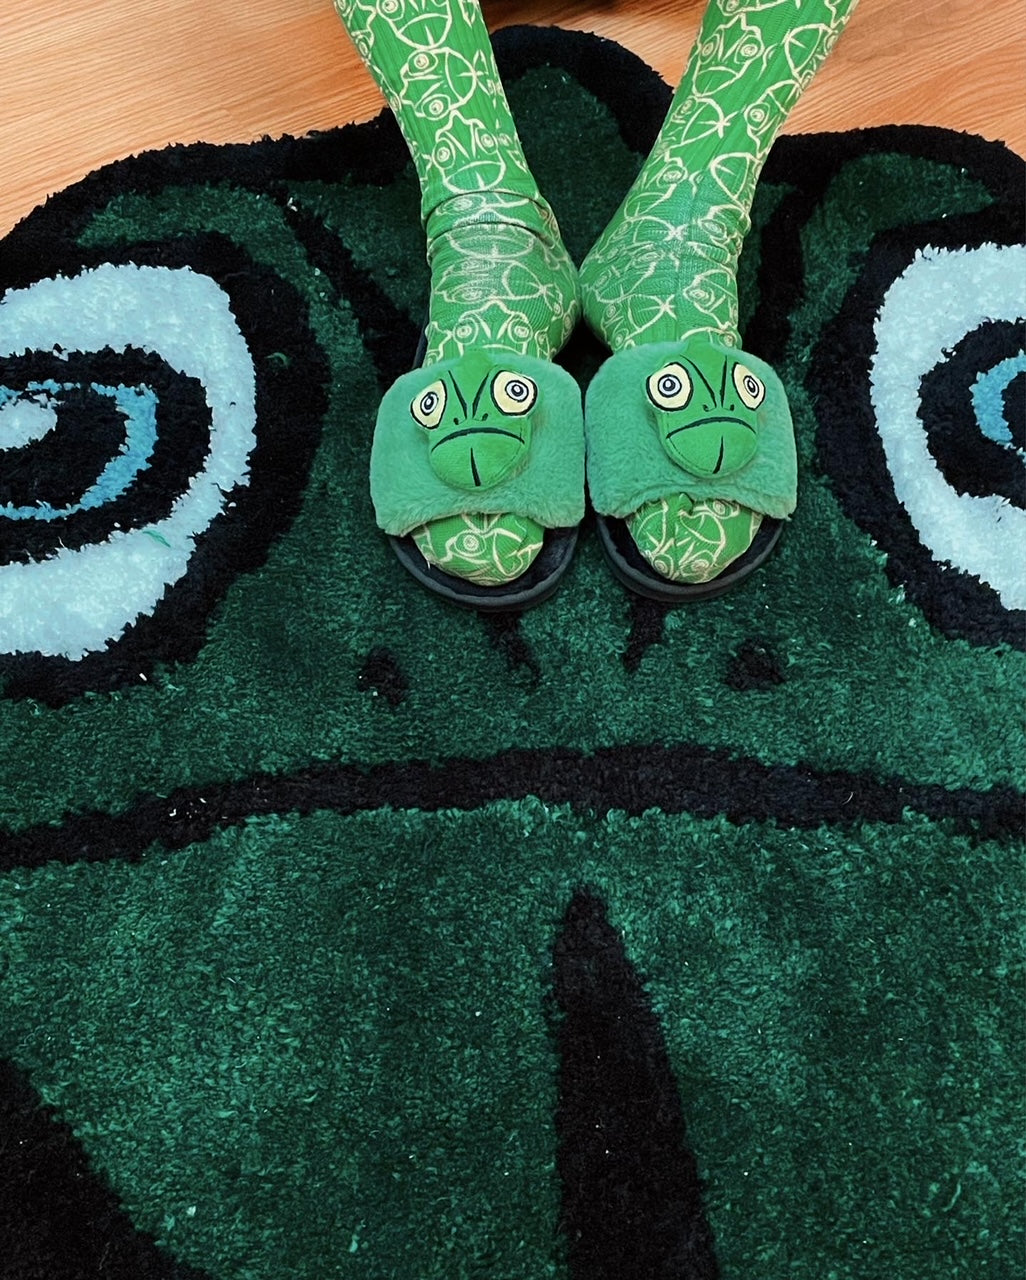 Mailloechii Designer Chameleon Carpet Rug